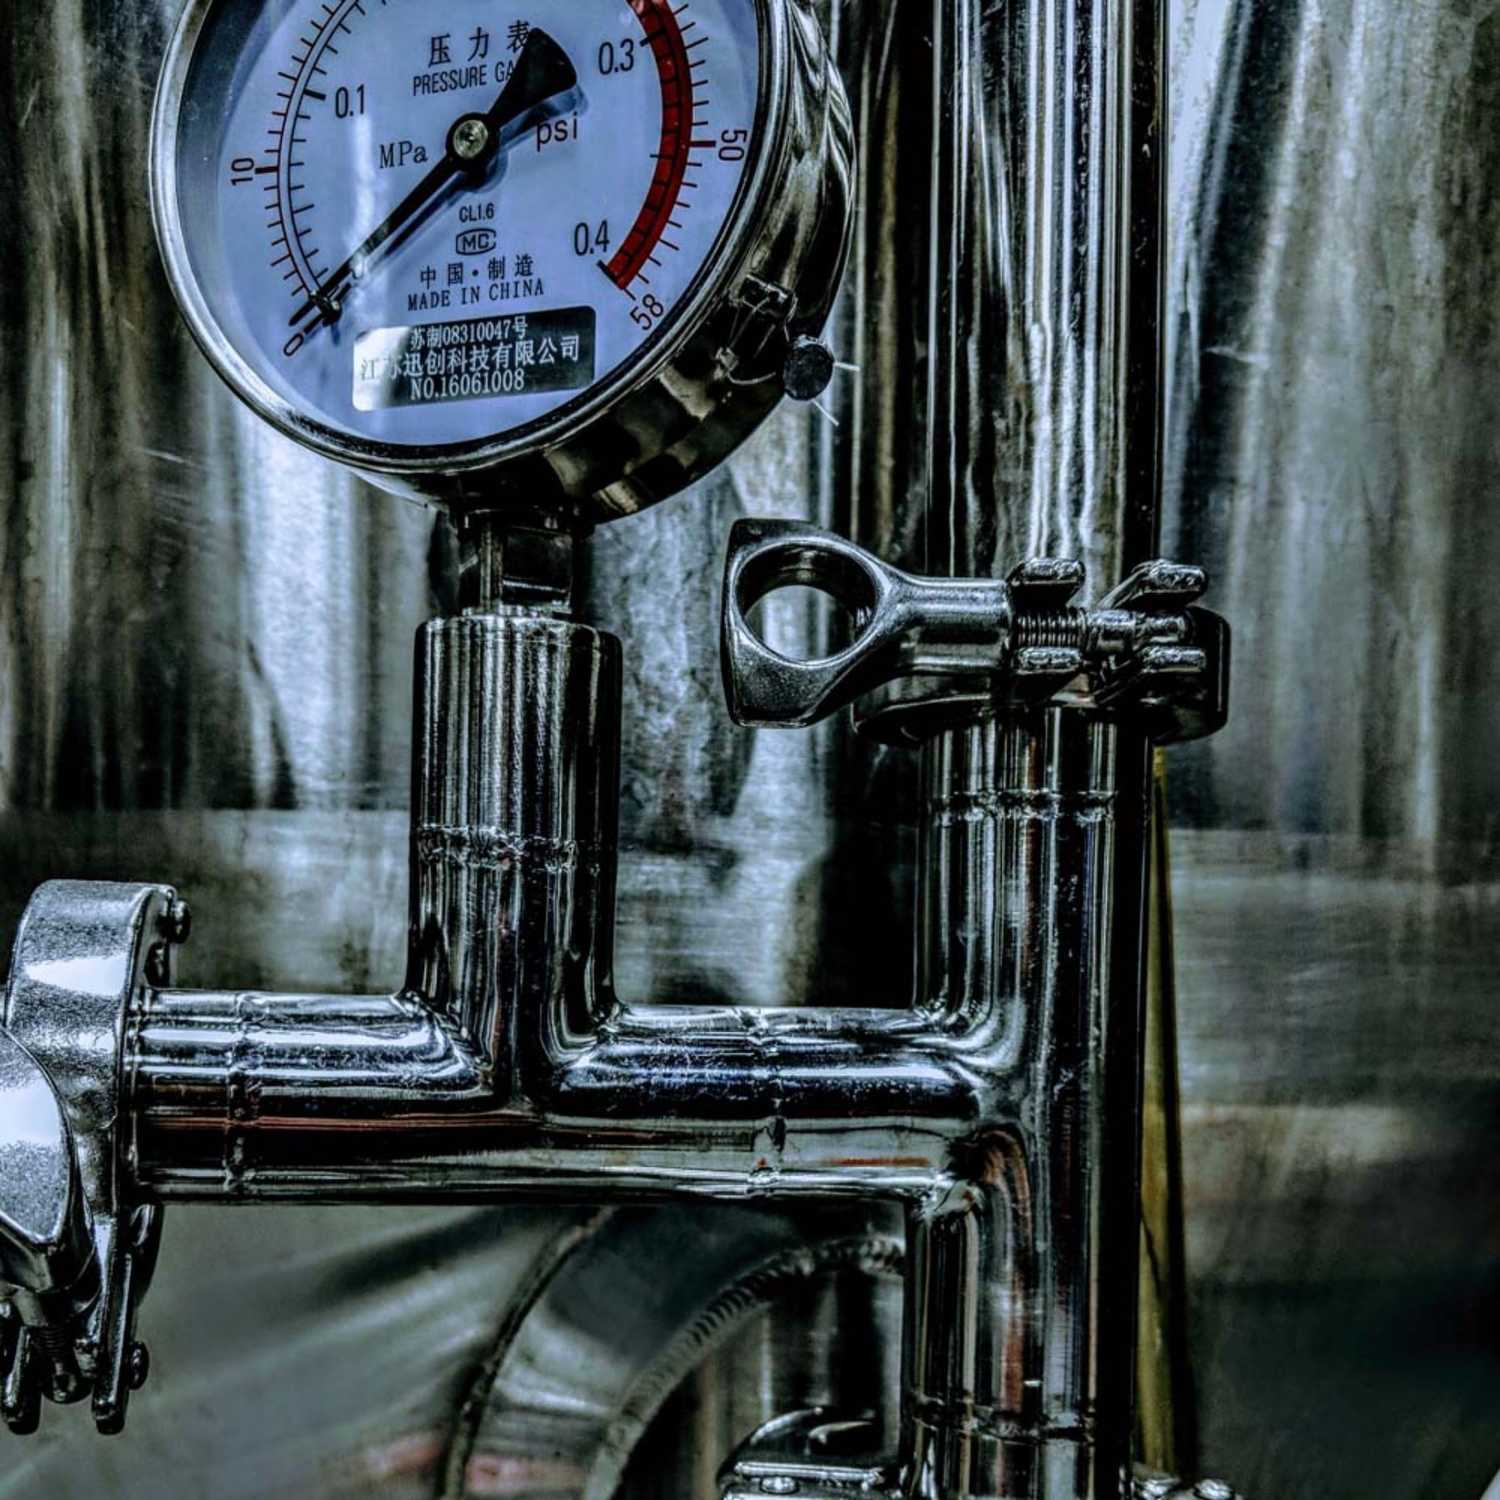 a pressure sensor on brewing equipment